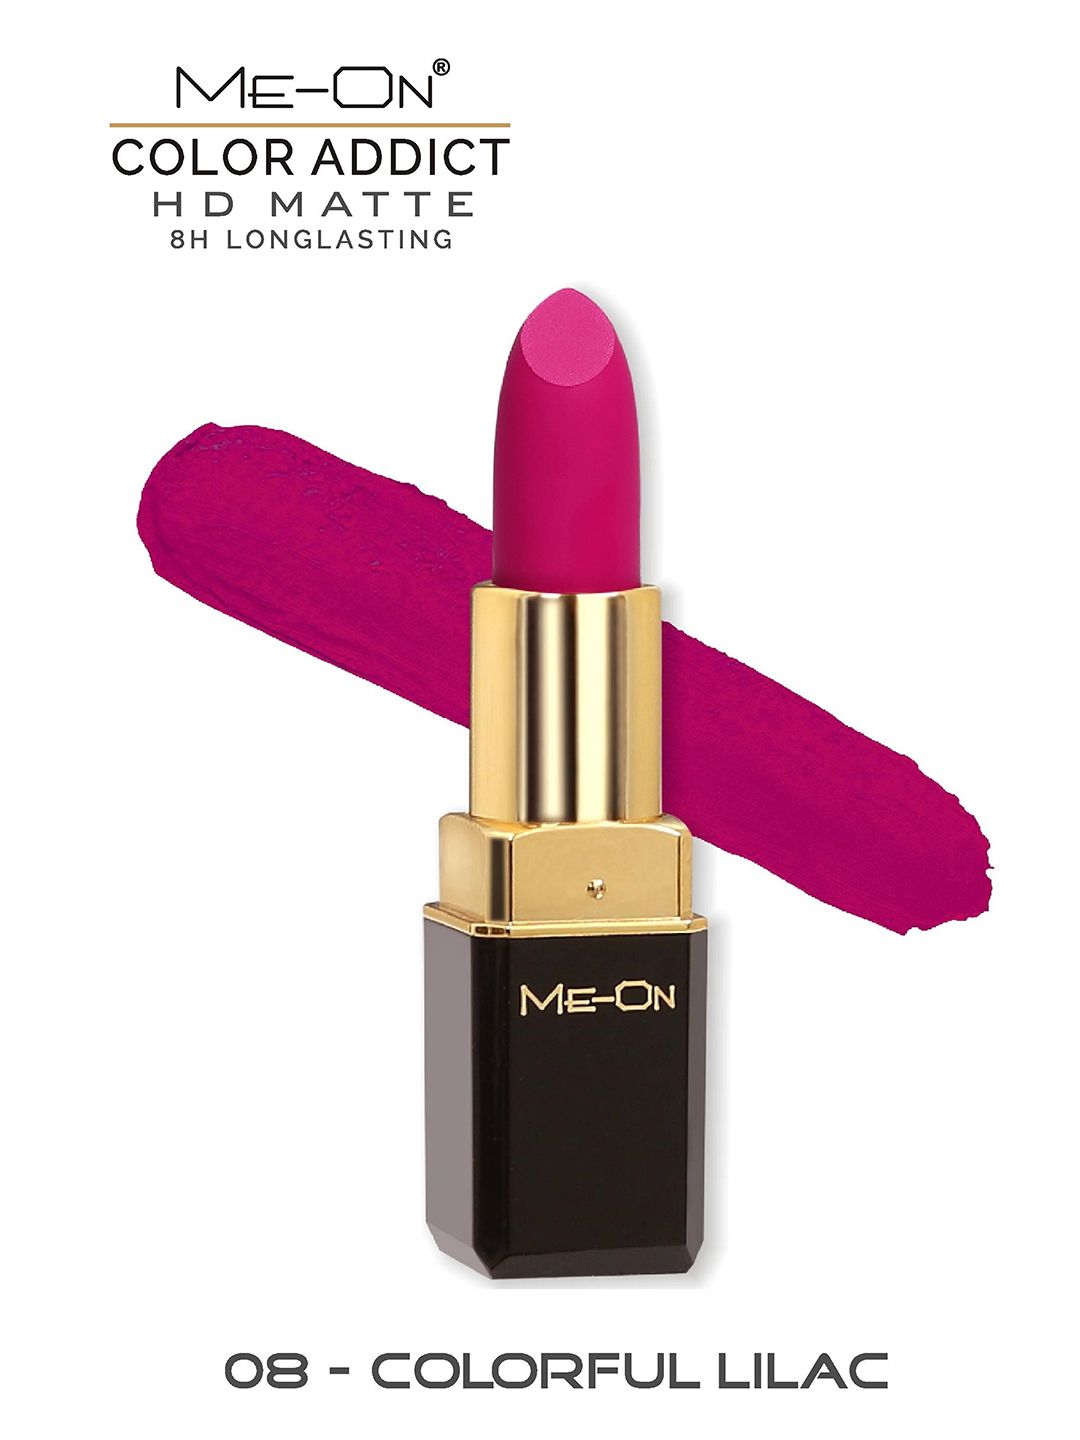 ME-ON Color Addict Matte Lipstick - Colorful Lilac 08 Price in India